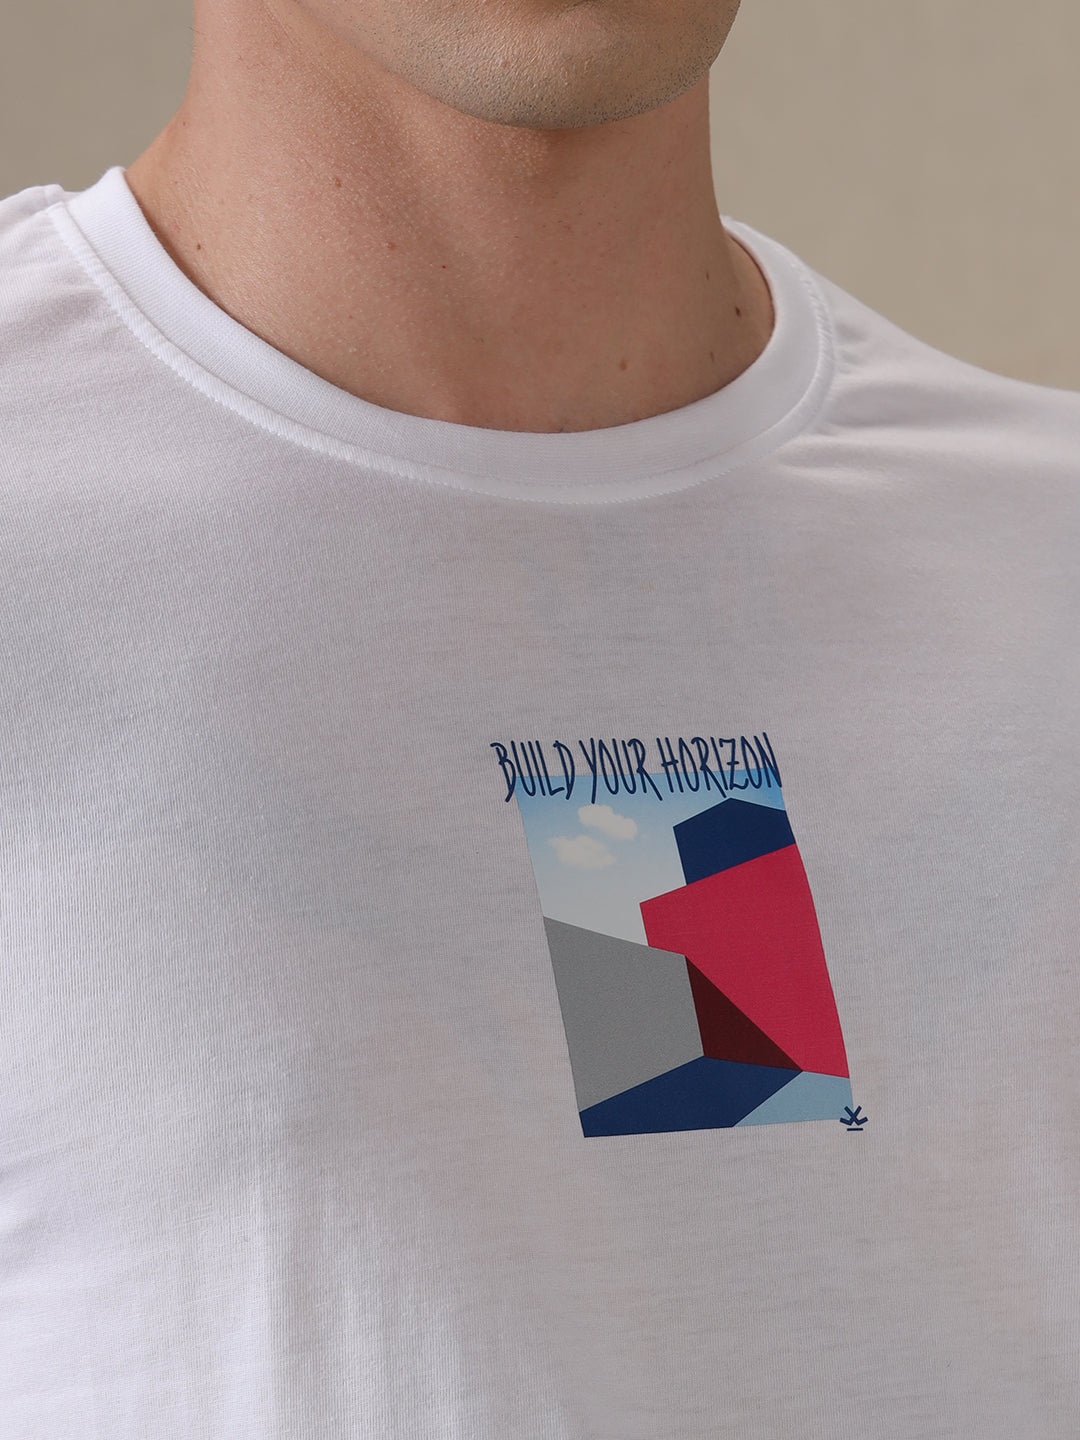 Build Your Horizon Printed T-Shirt